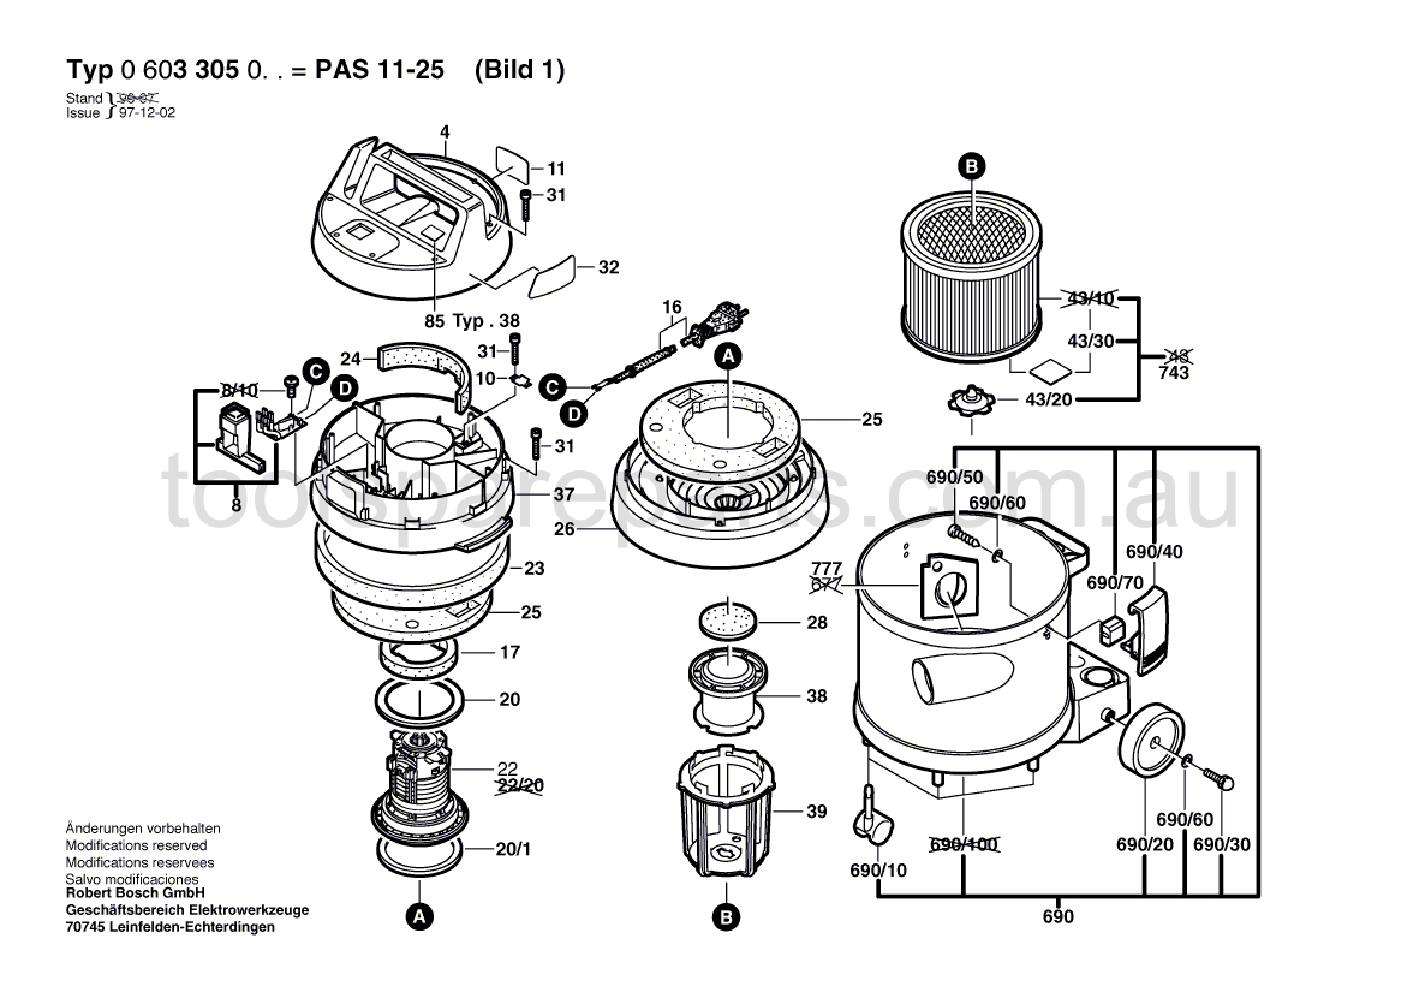 Bosch PAS 11-25 0603305037  Diagram 1